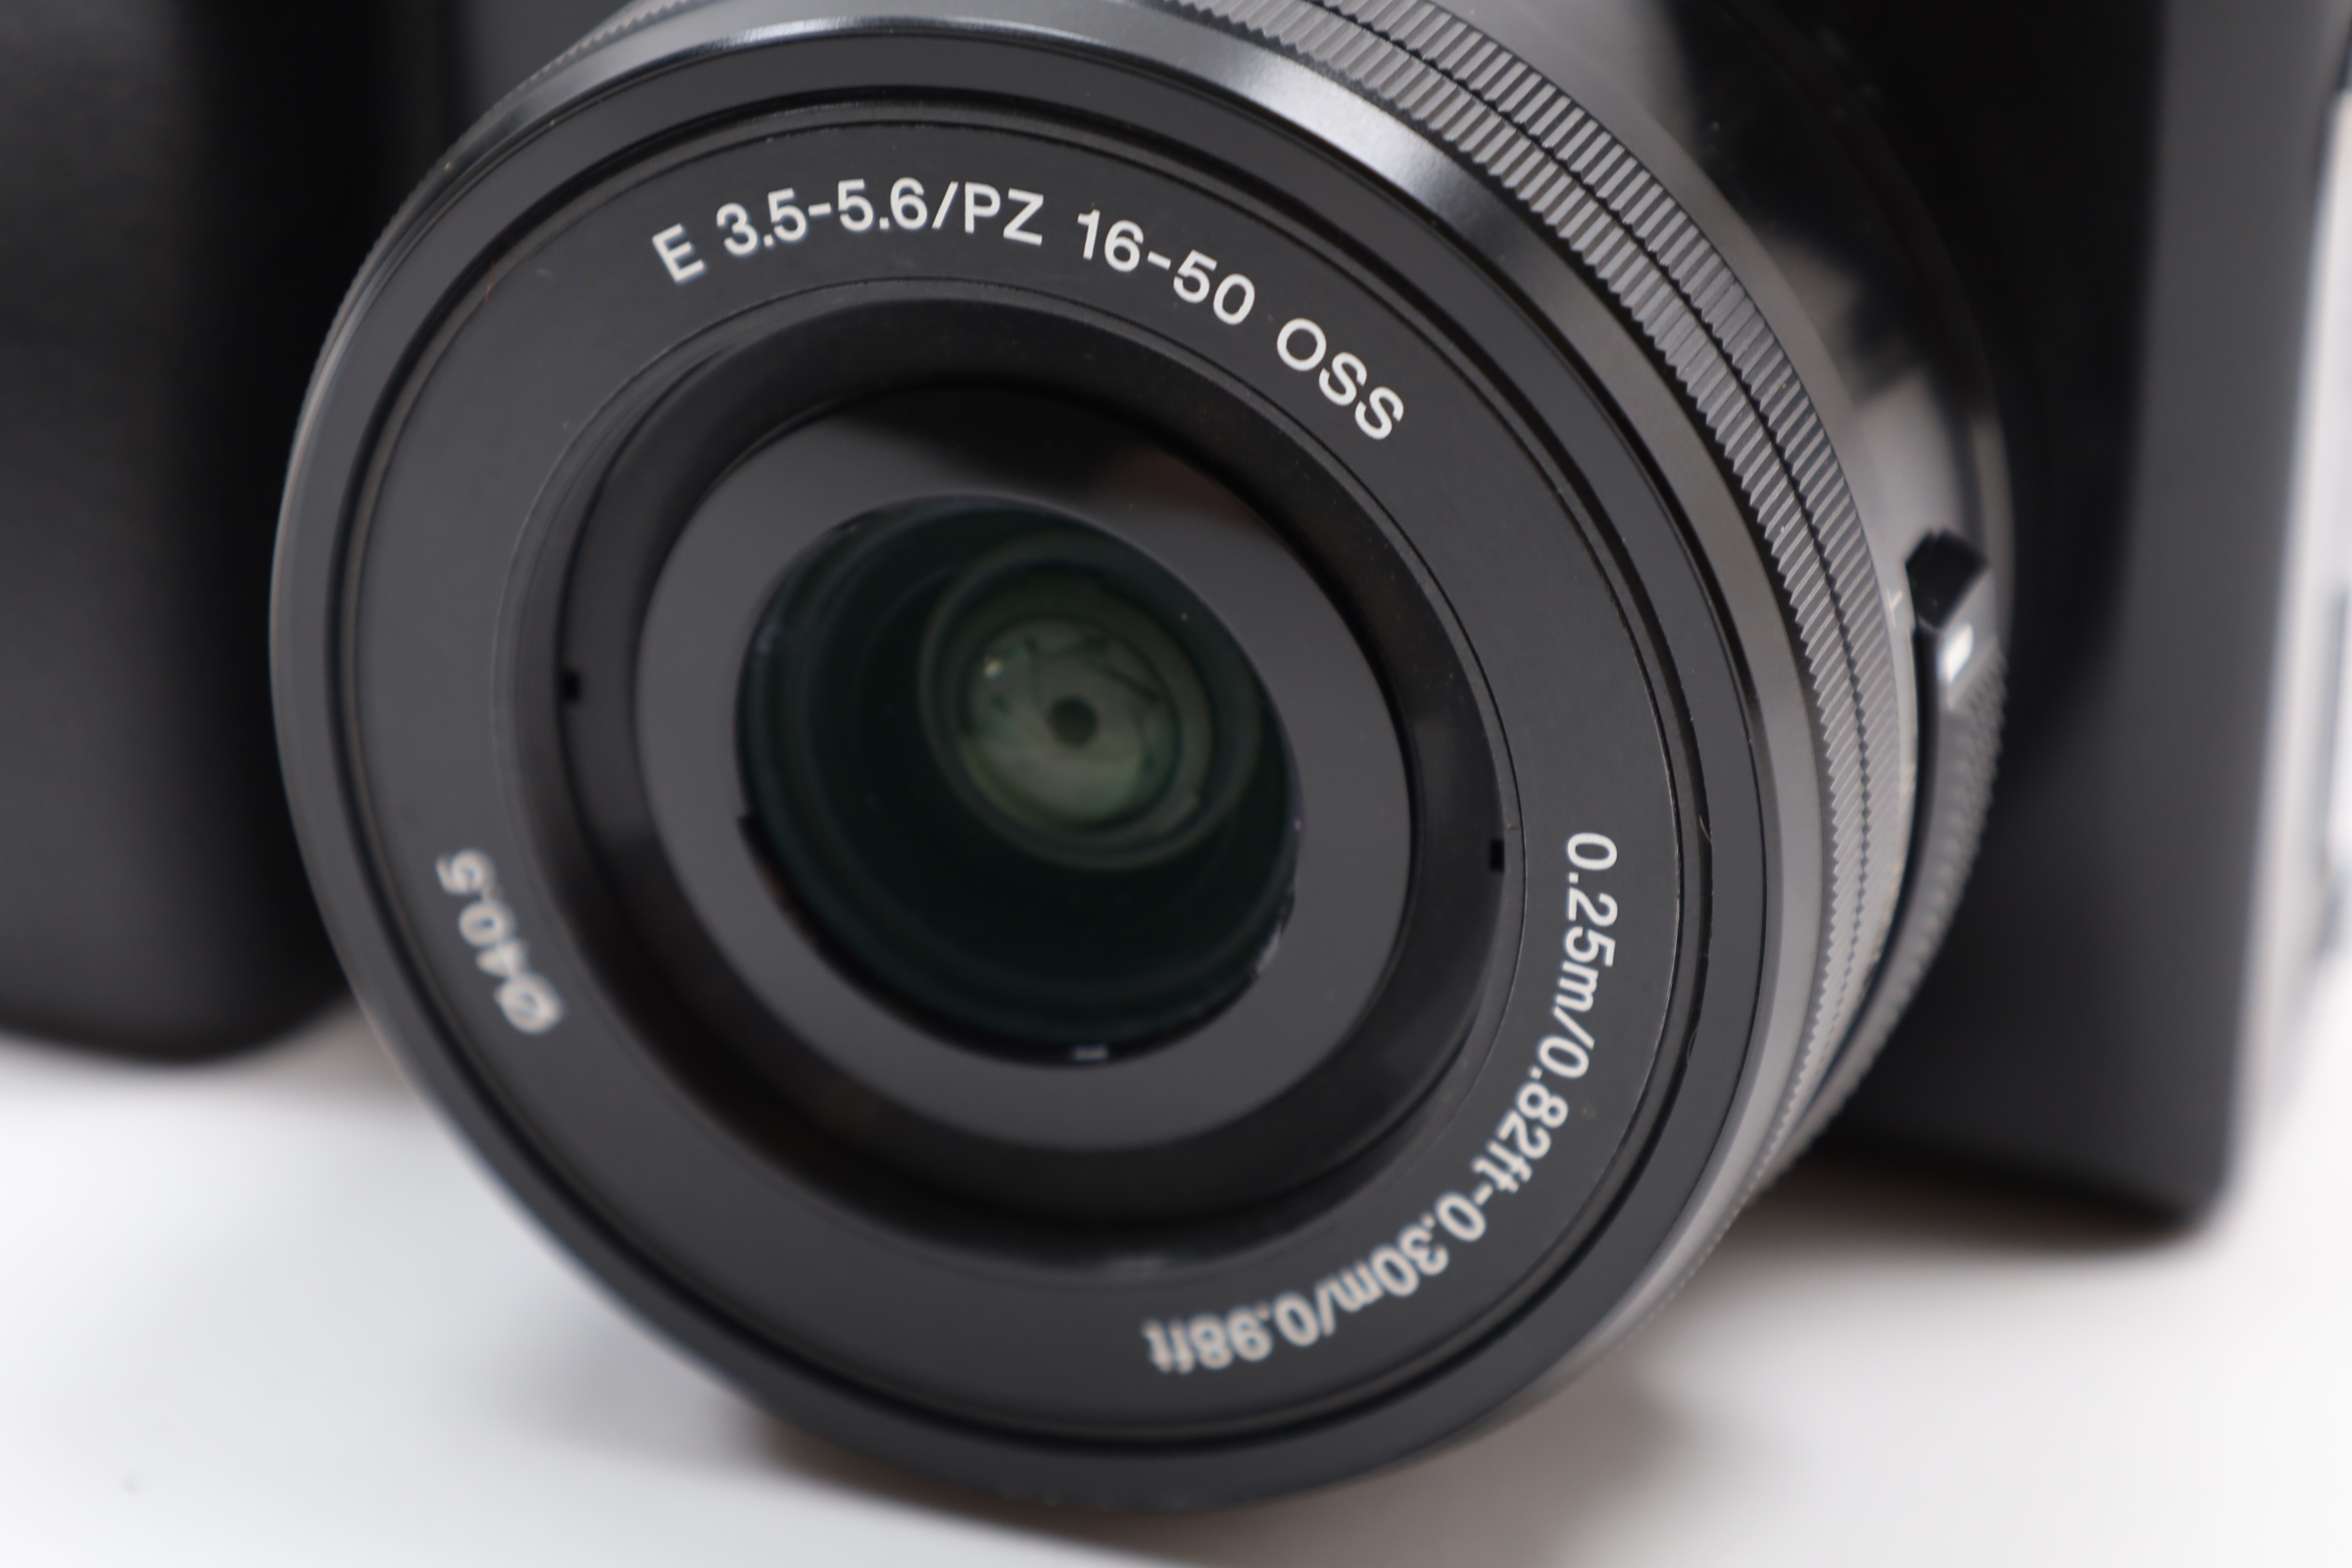 Sony Alpha 6100 Mirrorless 4K Video Camera with E PZ 16-50mm